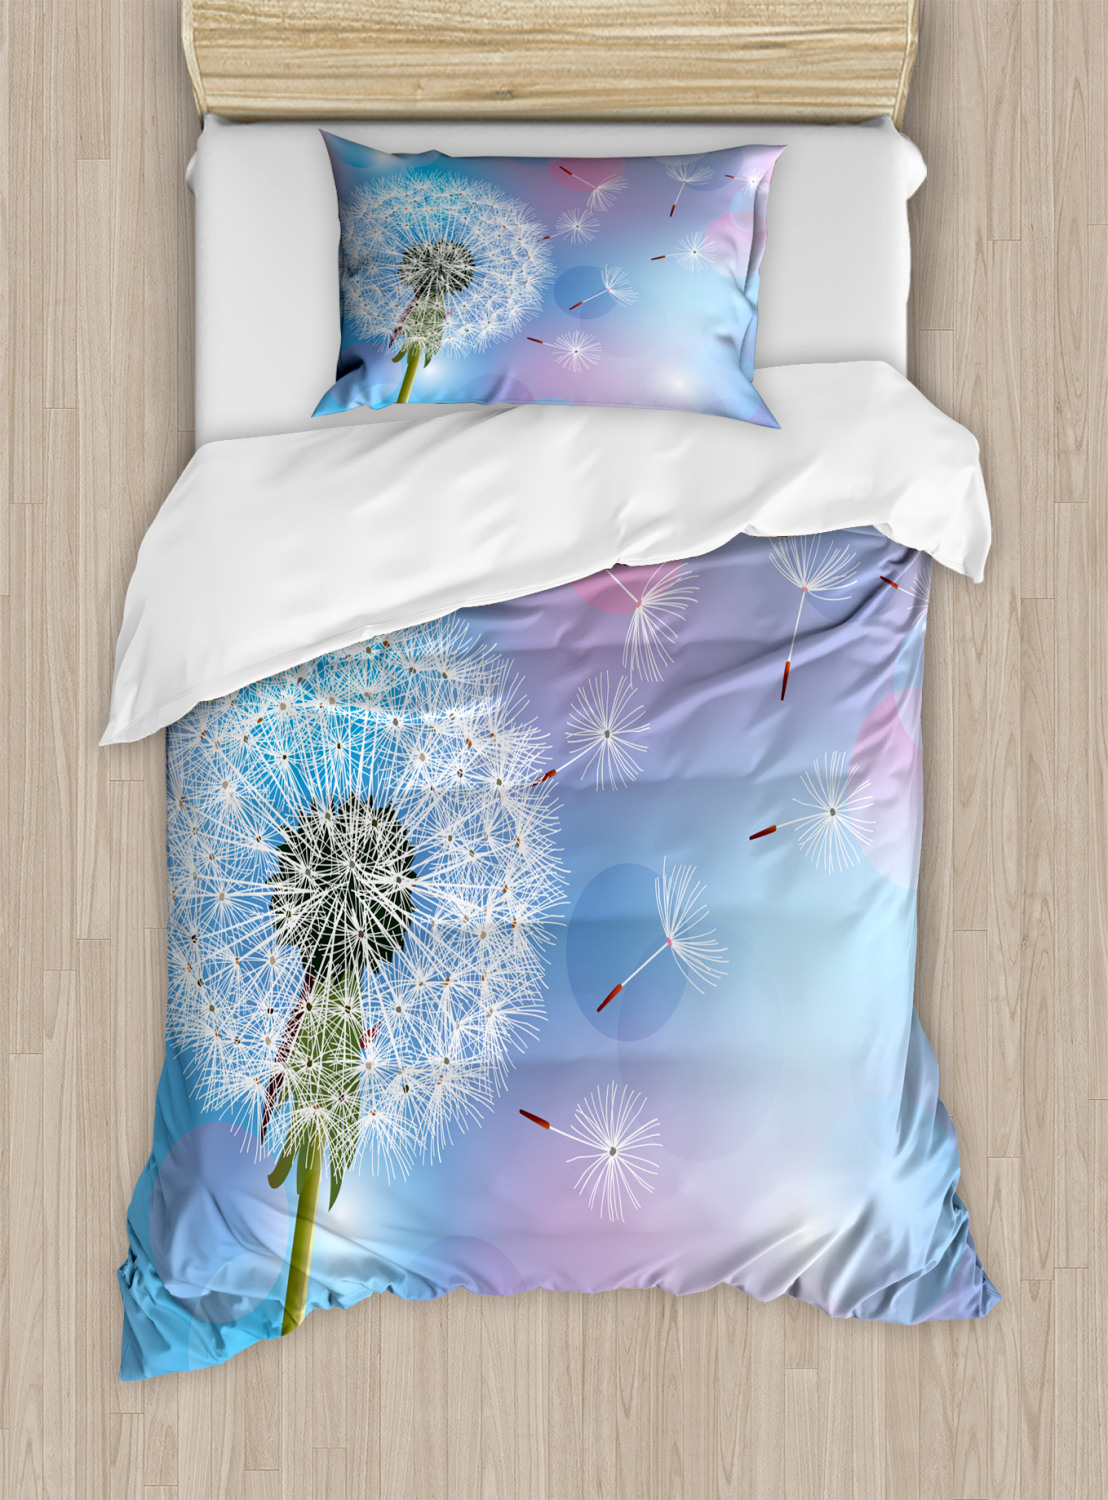 Bokeh Design Blowball Print Details about   Dandelion Quilted Bedspread & Pillow Shams Set 